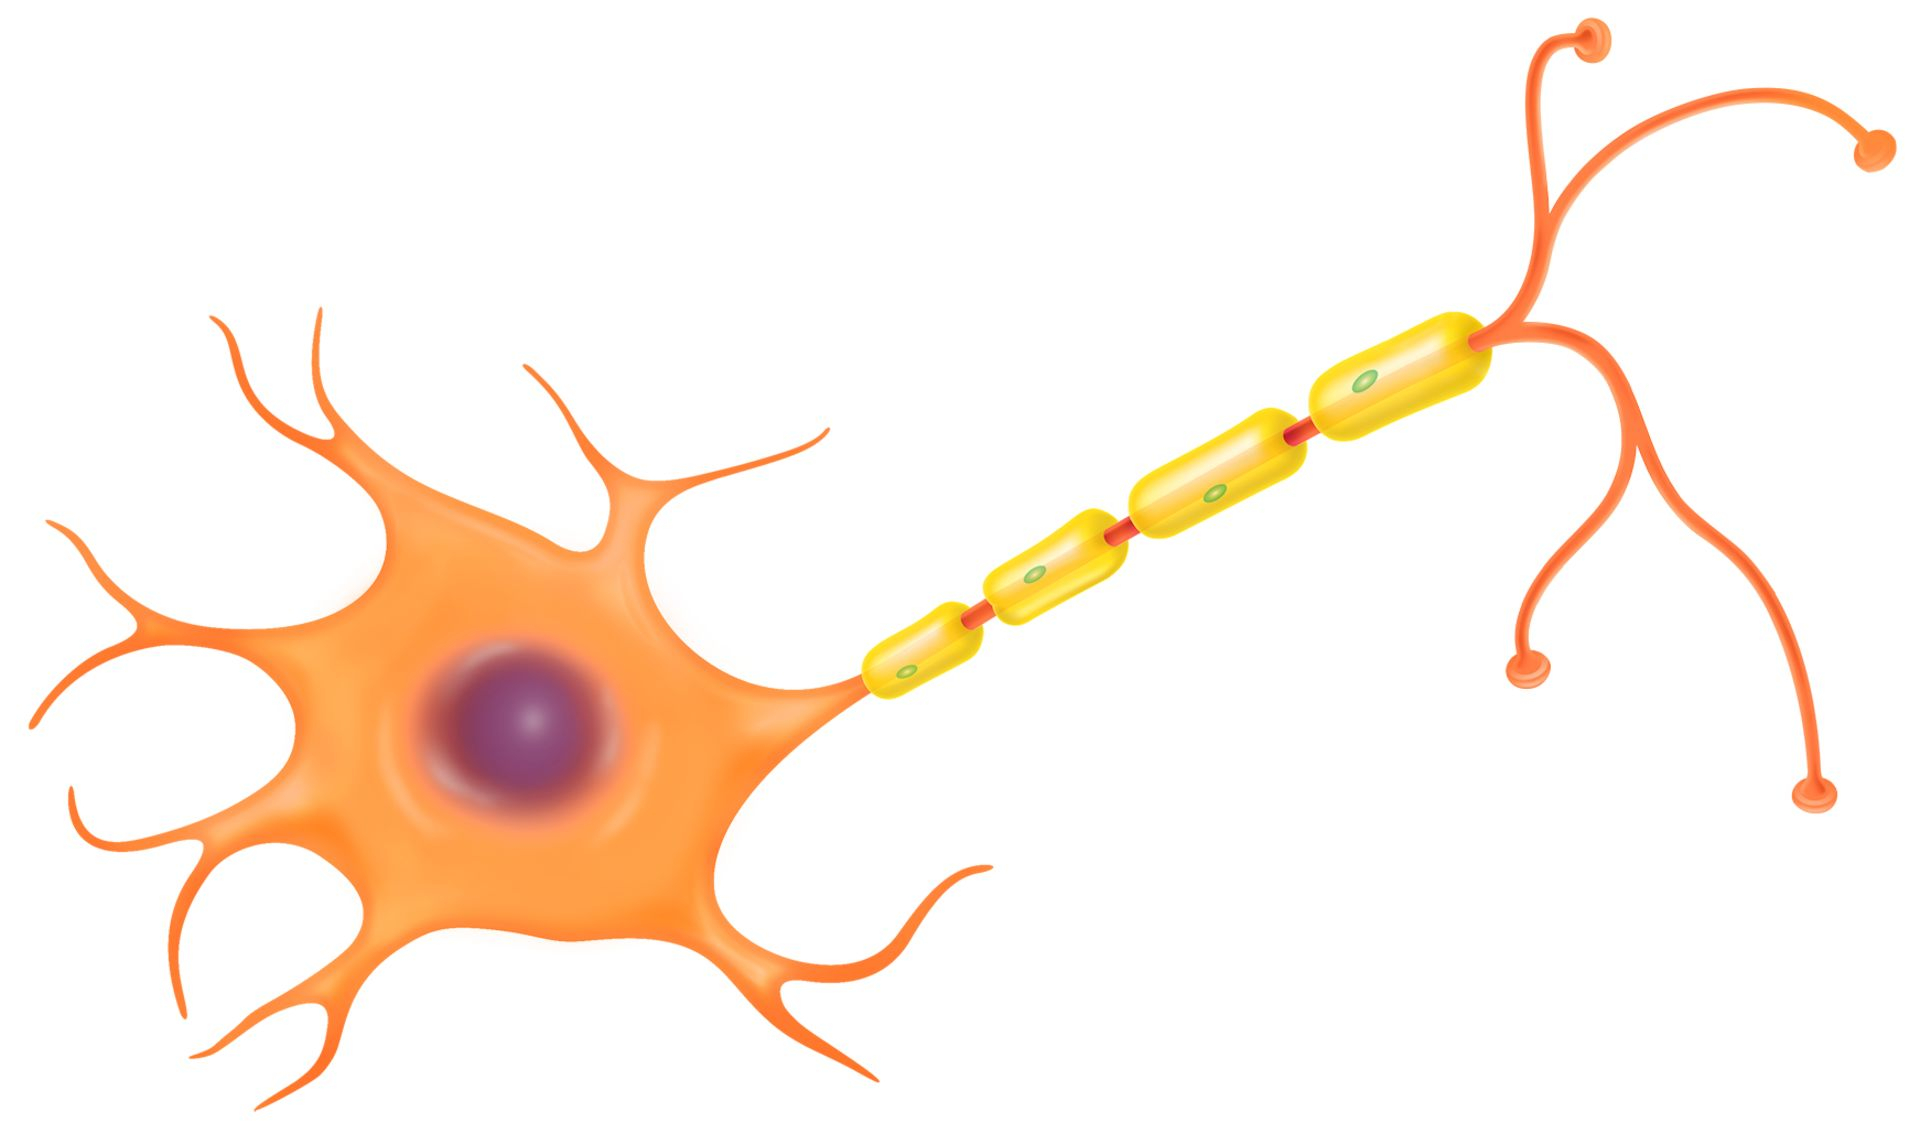 Nerve Cell Diagram Nerve Cell Function Nerve Cell Diagram Dk Find Out